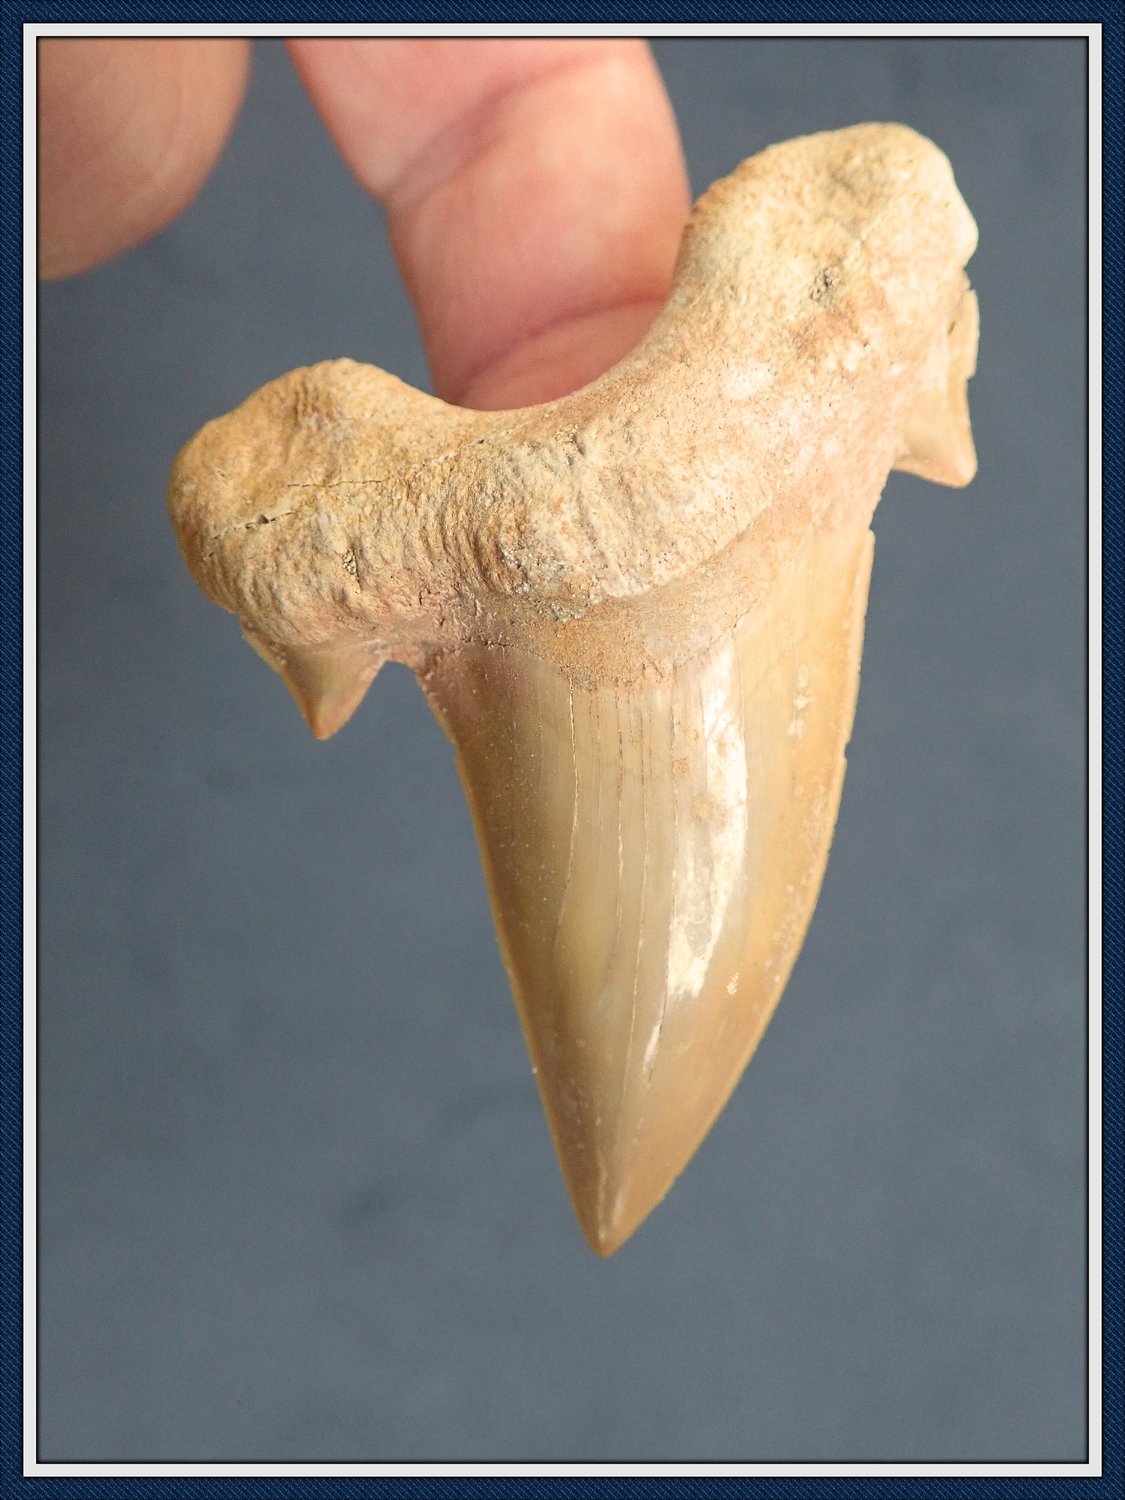 Moroccan Otodus Shark Tooth / Eocene Era